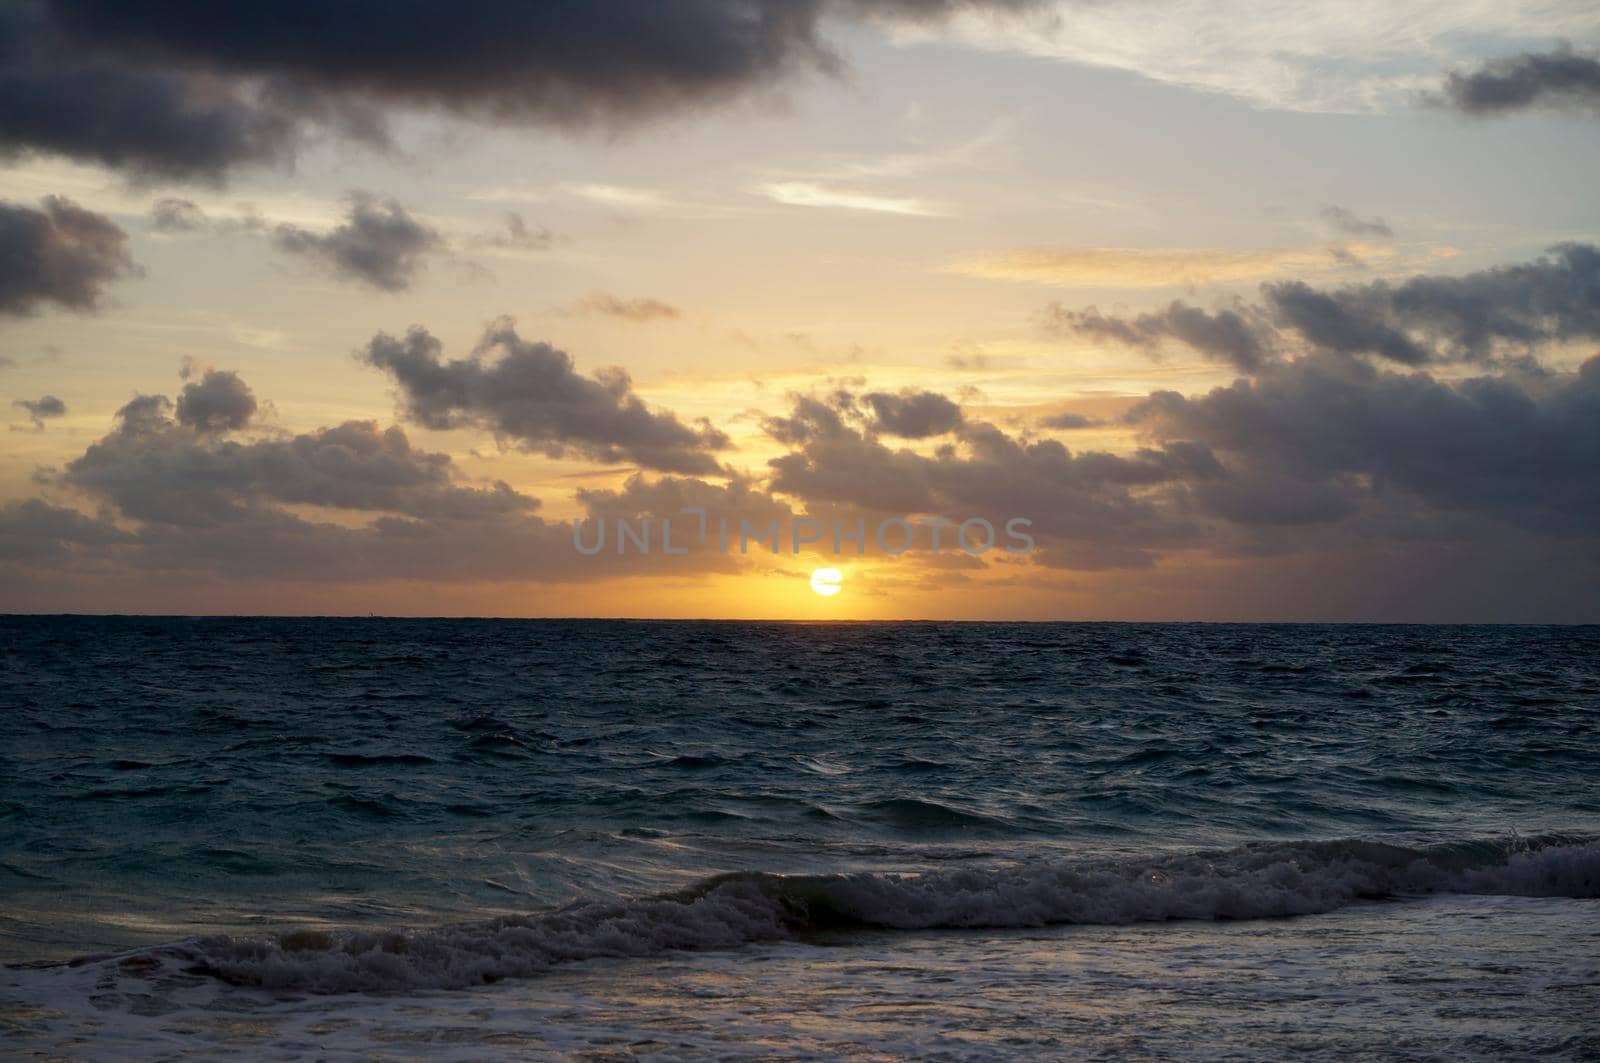 Sunrise over the ocean through the clouds on Waimanalo Beach  by EricGBVD